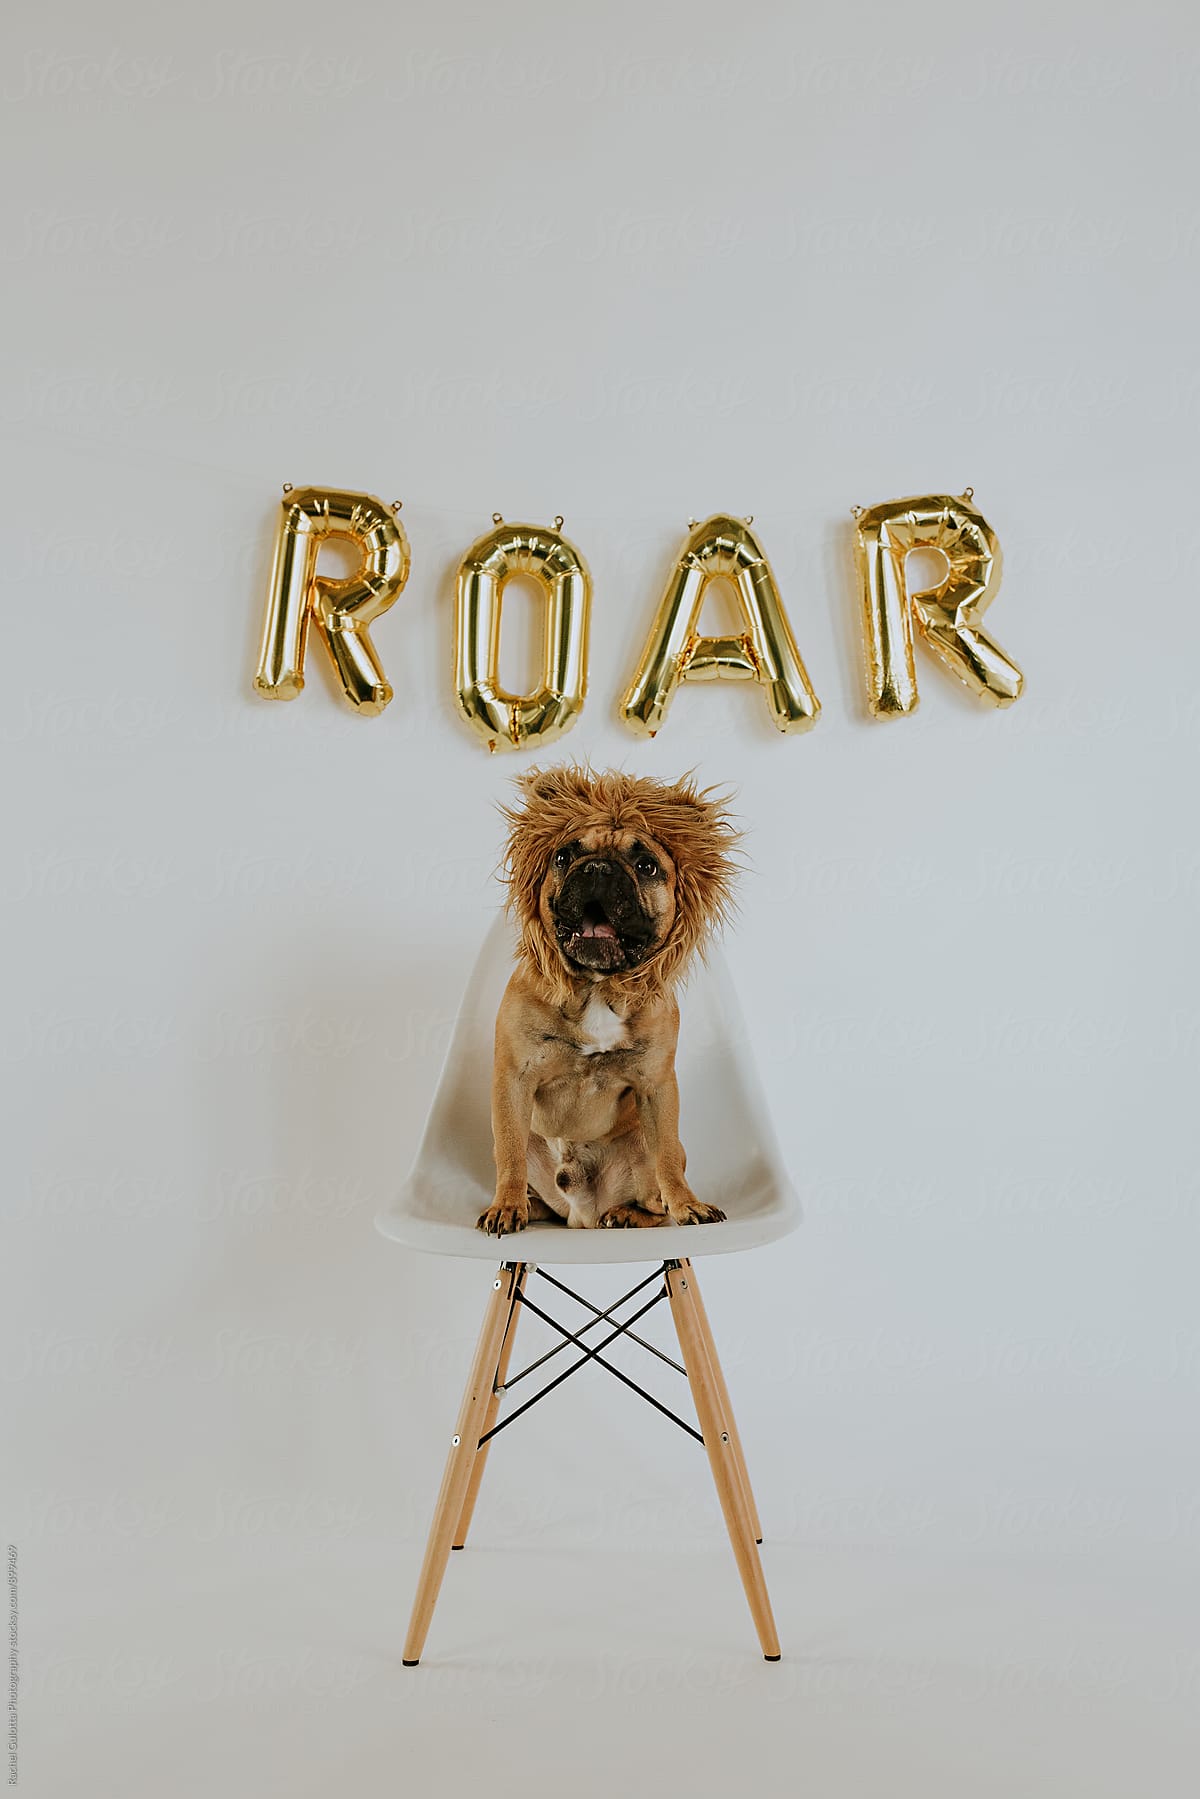 A Dog Wearing a Lion Mane Roaring with Roar Balloon Letters That Spell out Roar